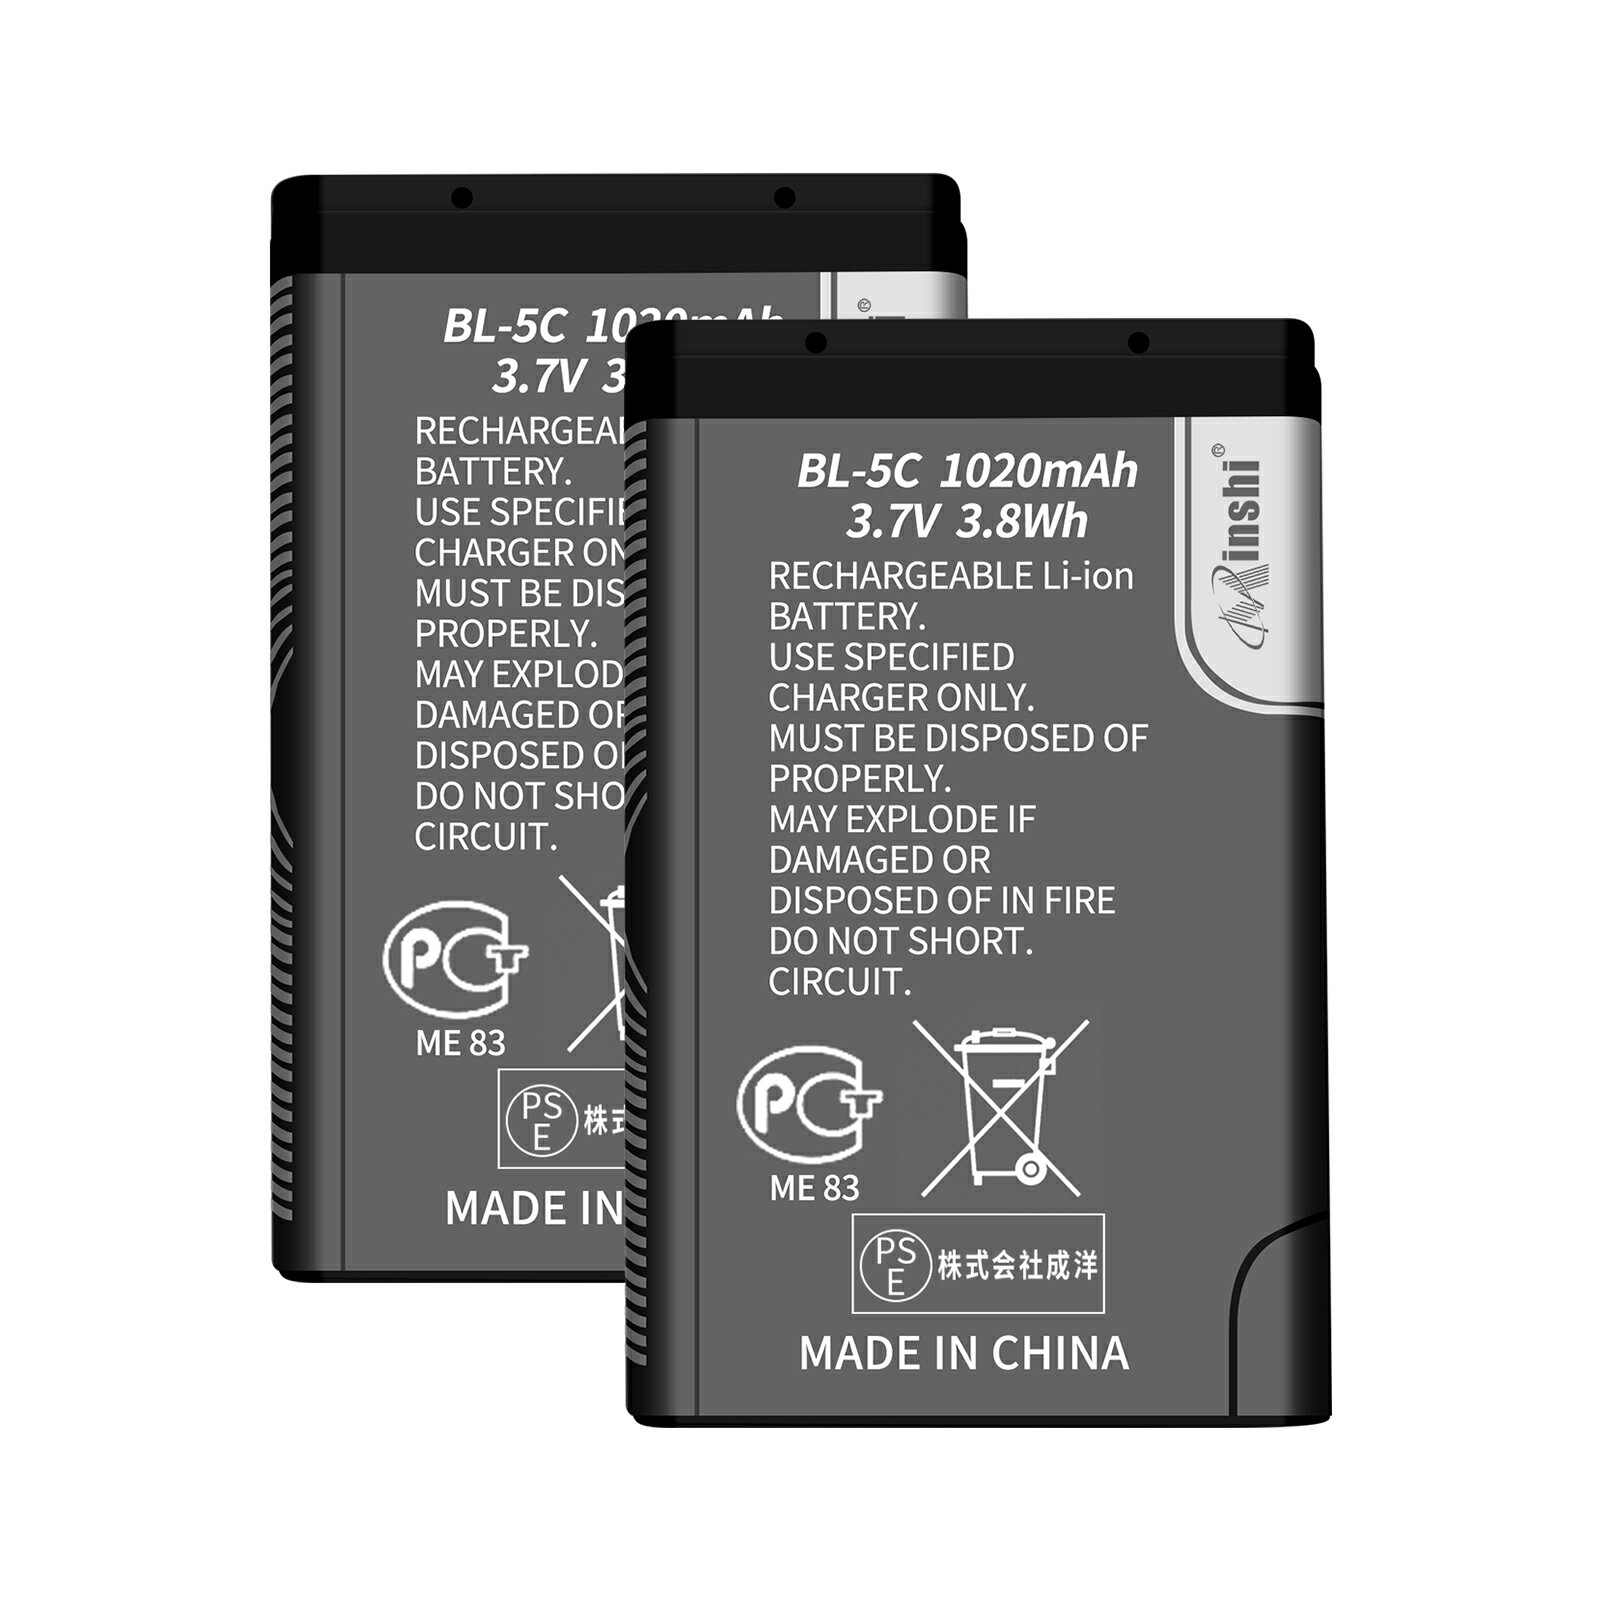 minshi 新品 NOKIA 1110 互換バッテリー 高品質交換用電池パック 【電池2個】 PSE認証 工具セット 1年間保証 1020mAh